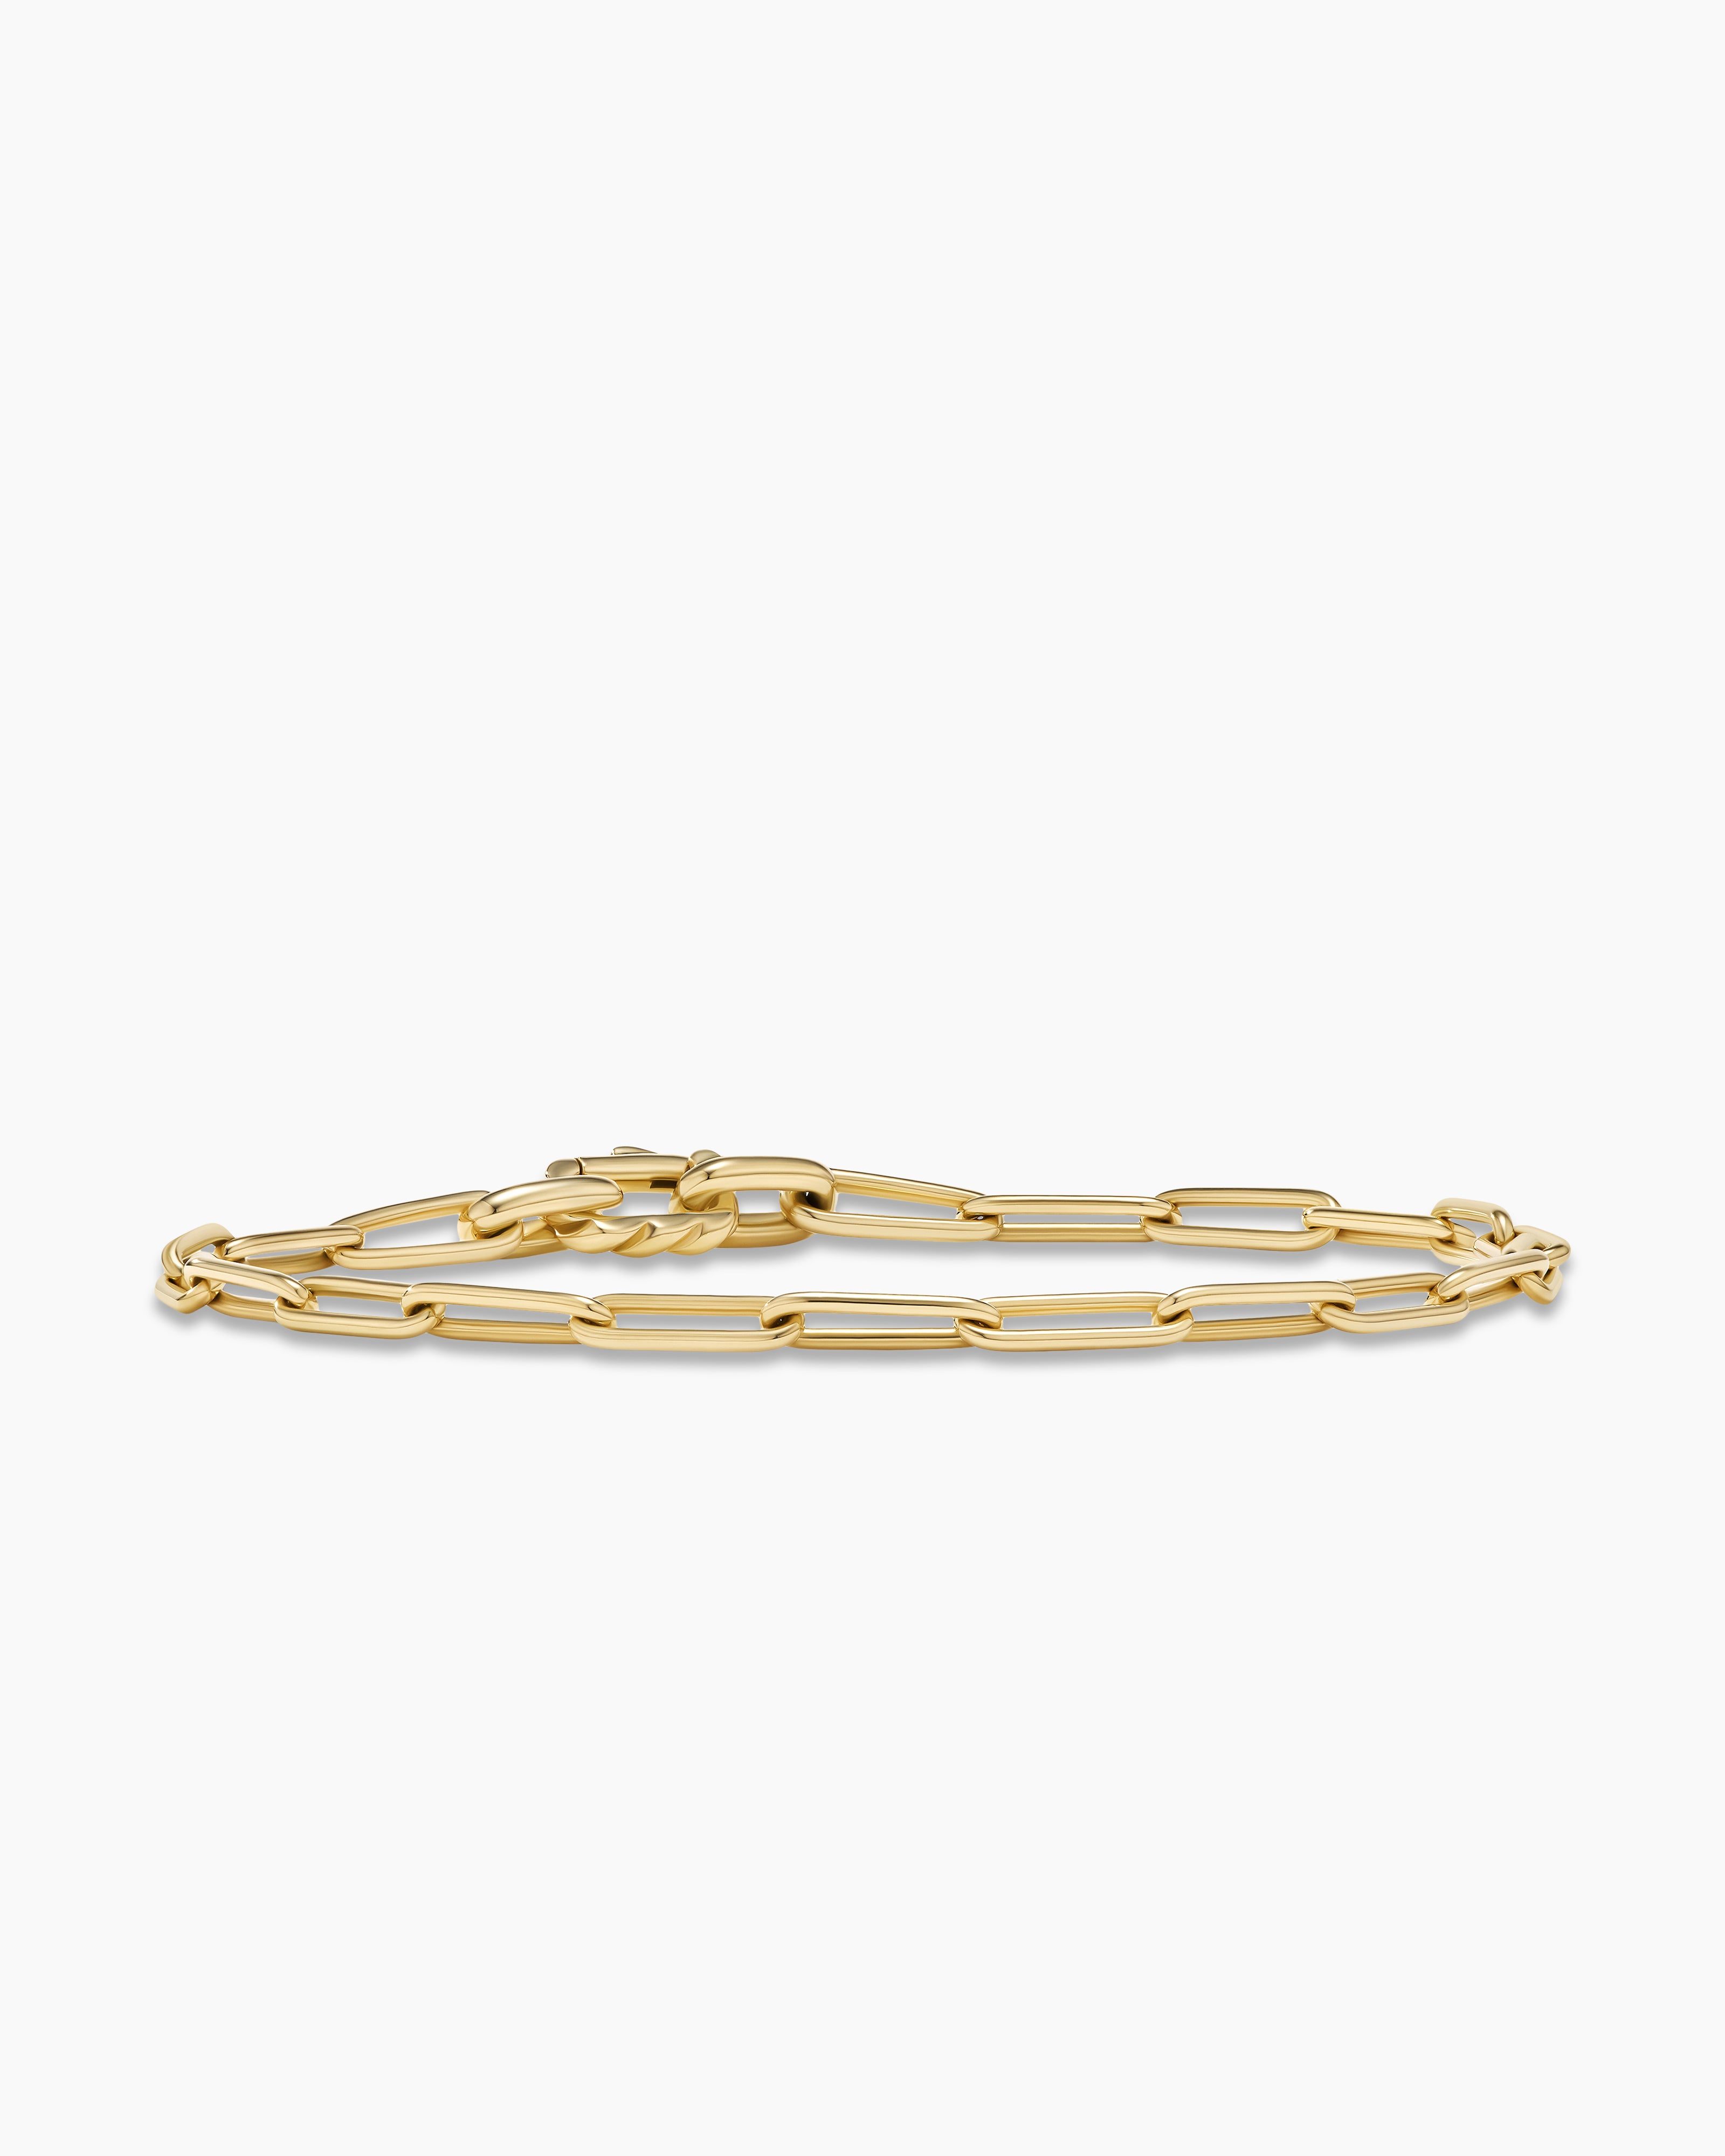 David Yurman Chain Link Bracelet in 18K Yellow Gold, 3.5mm Men's Size Large